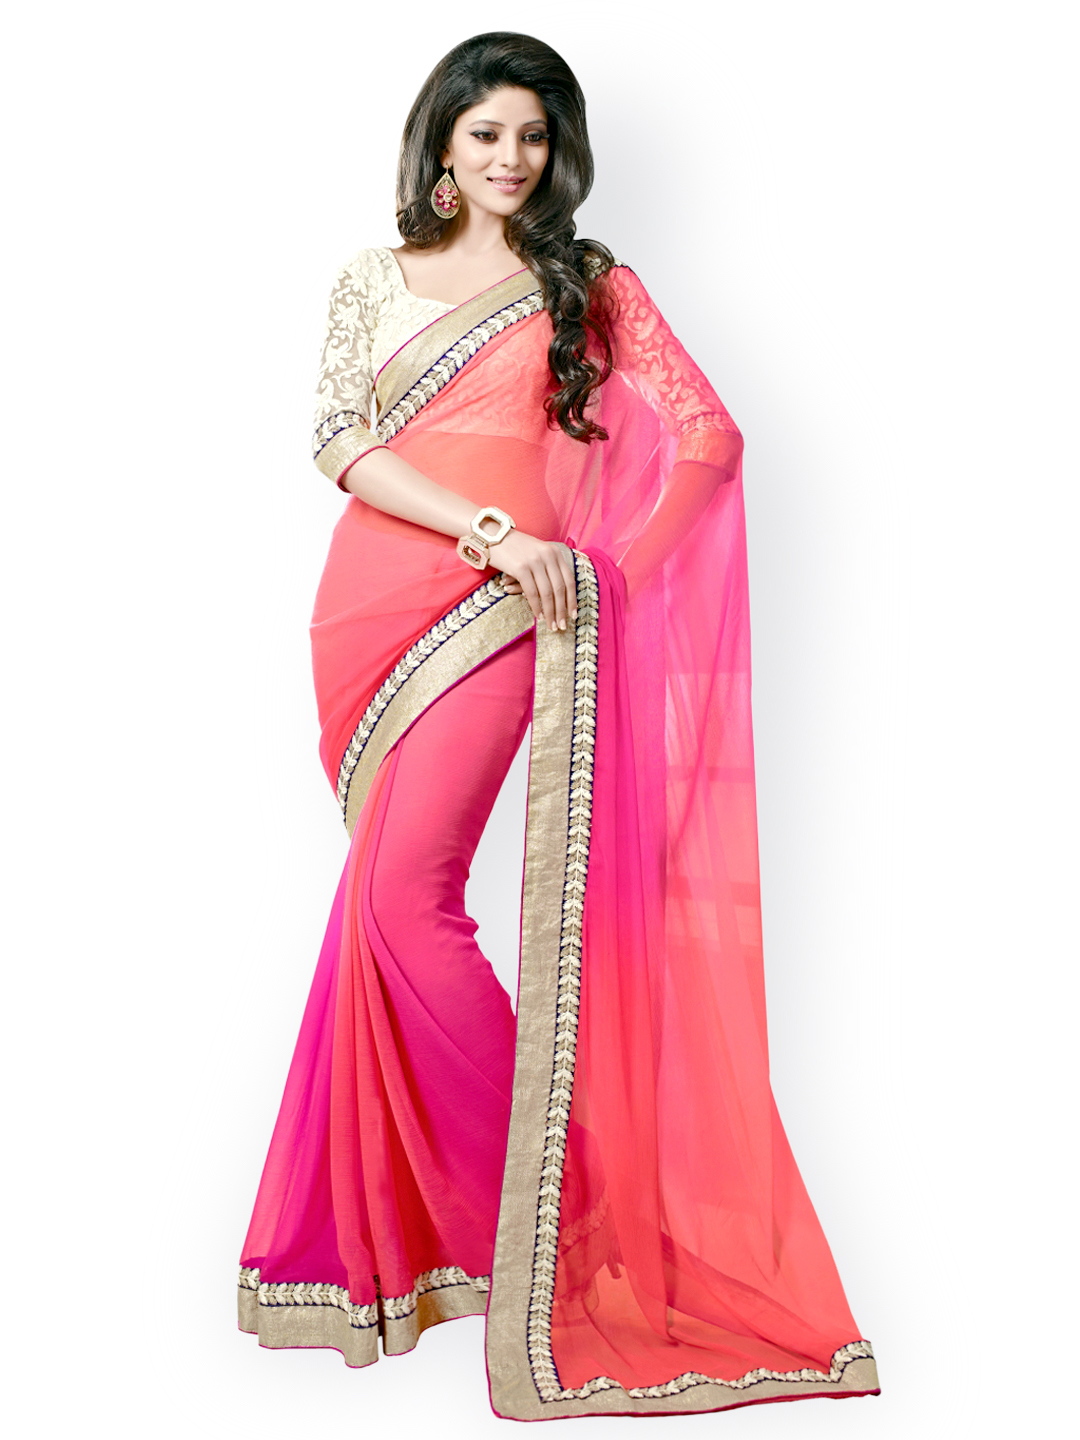 Triveni Party wear Sari for women